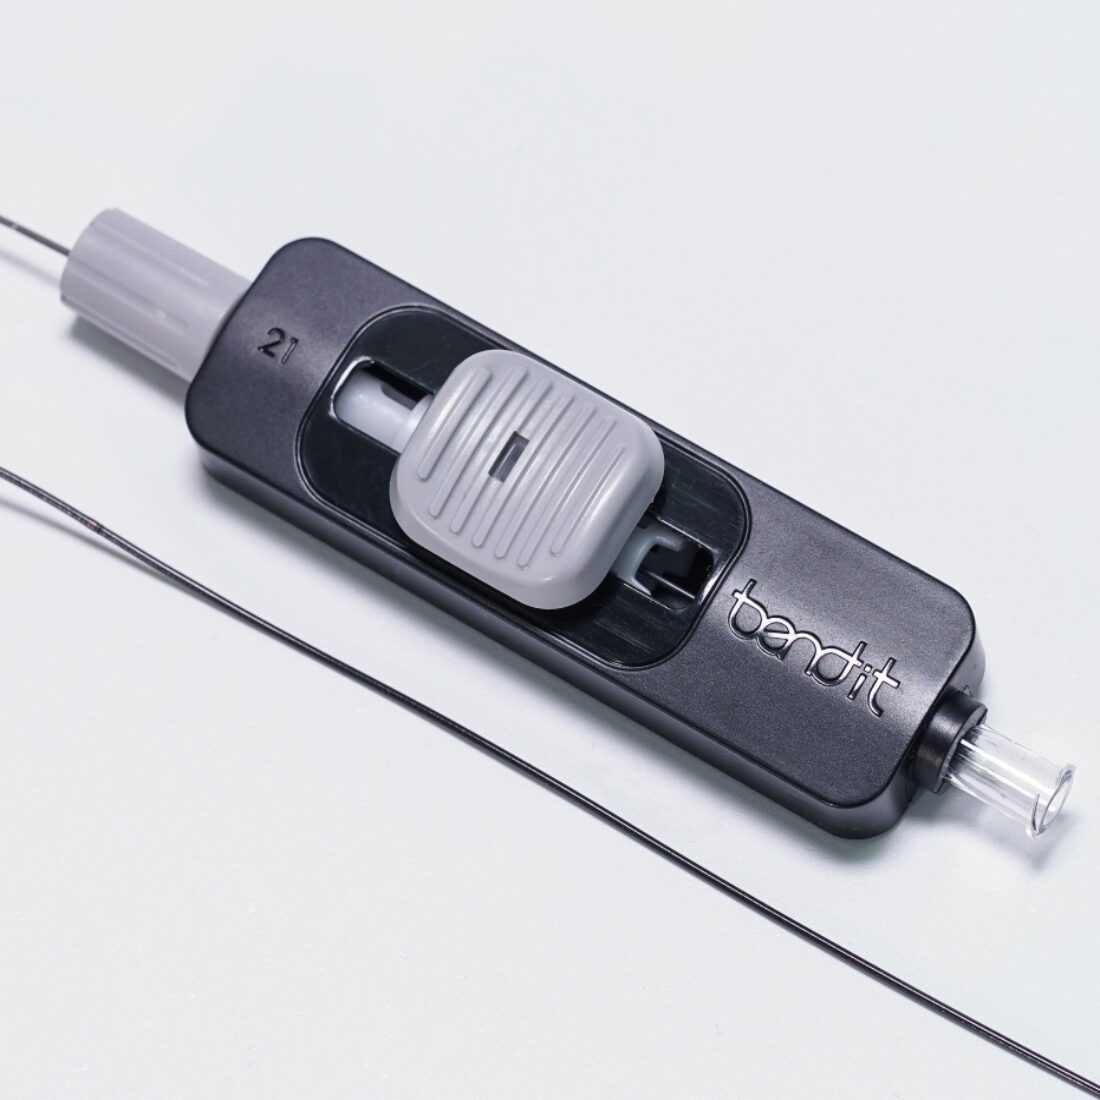 Benditâ€™s unique steerable microcatheter has a bendable tip for easier vascular navigation. Photo courtesy of Bendit Technologies